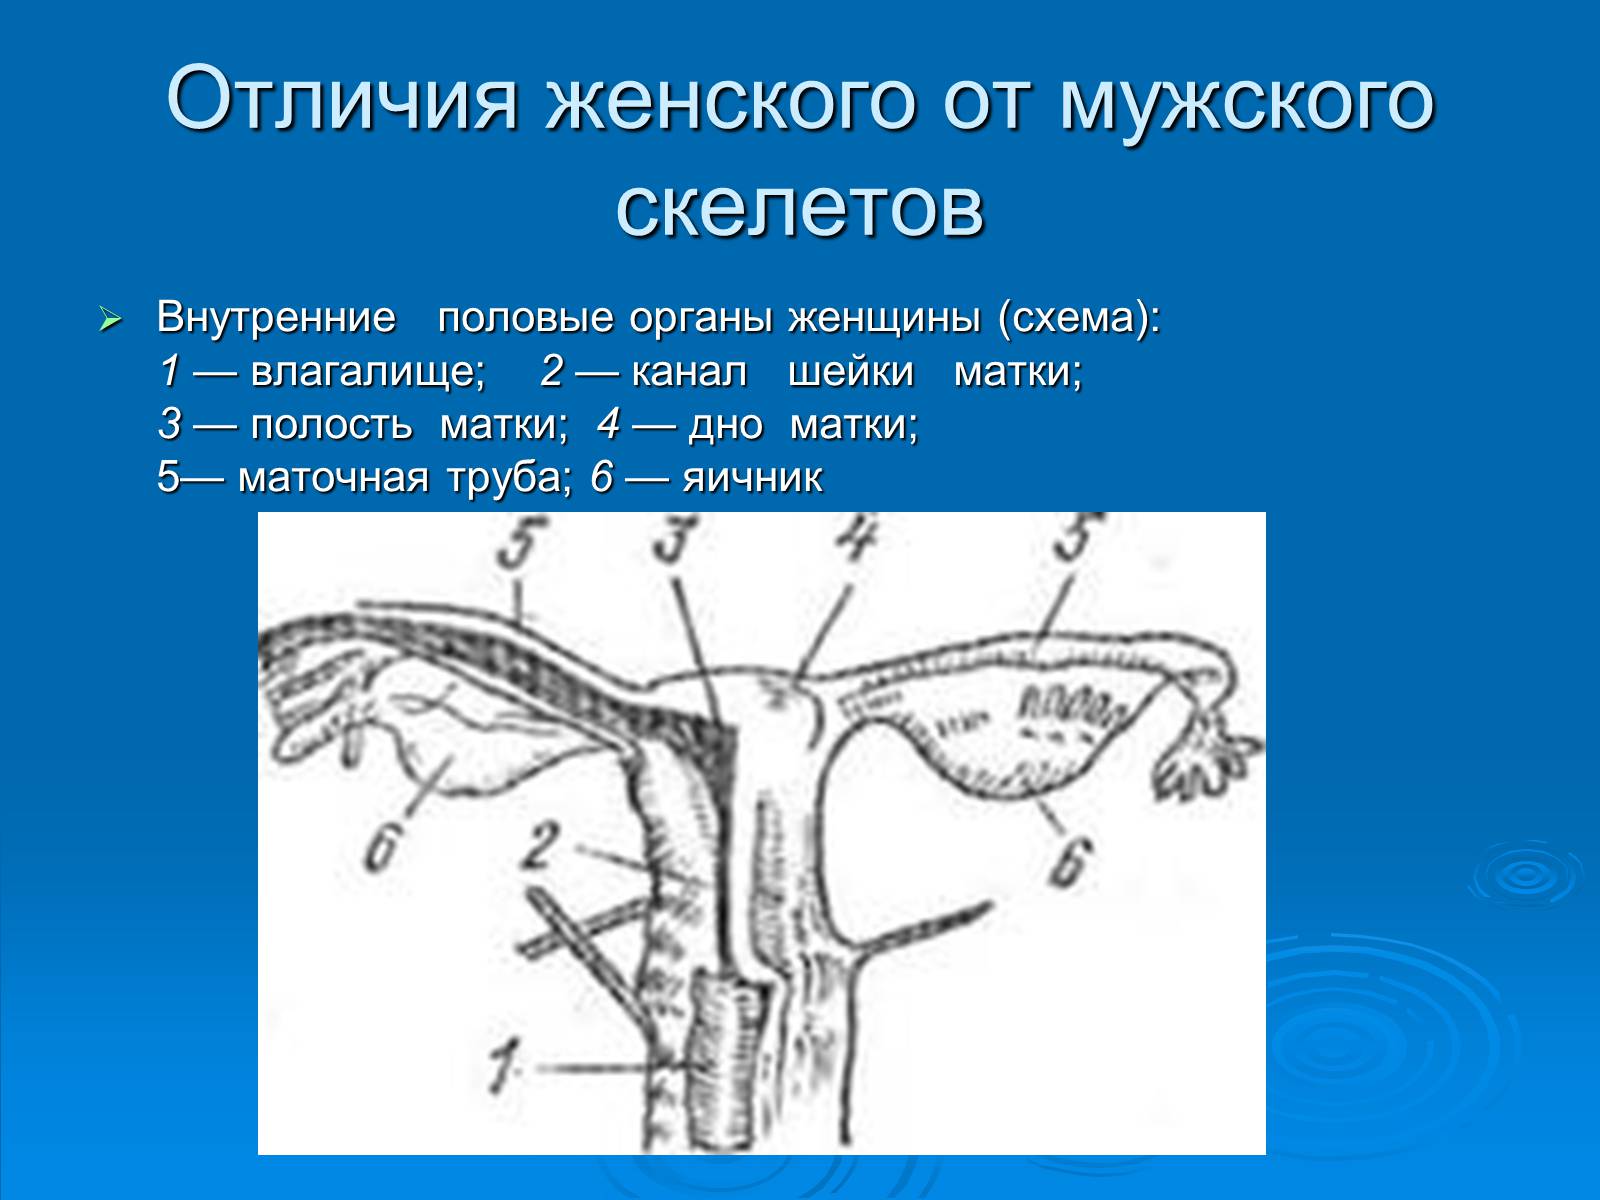 Презентація на тему «Анатомическое отличие скелетов мужчин и женщин» - Слайд #8